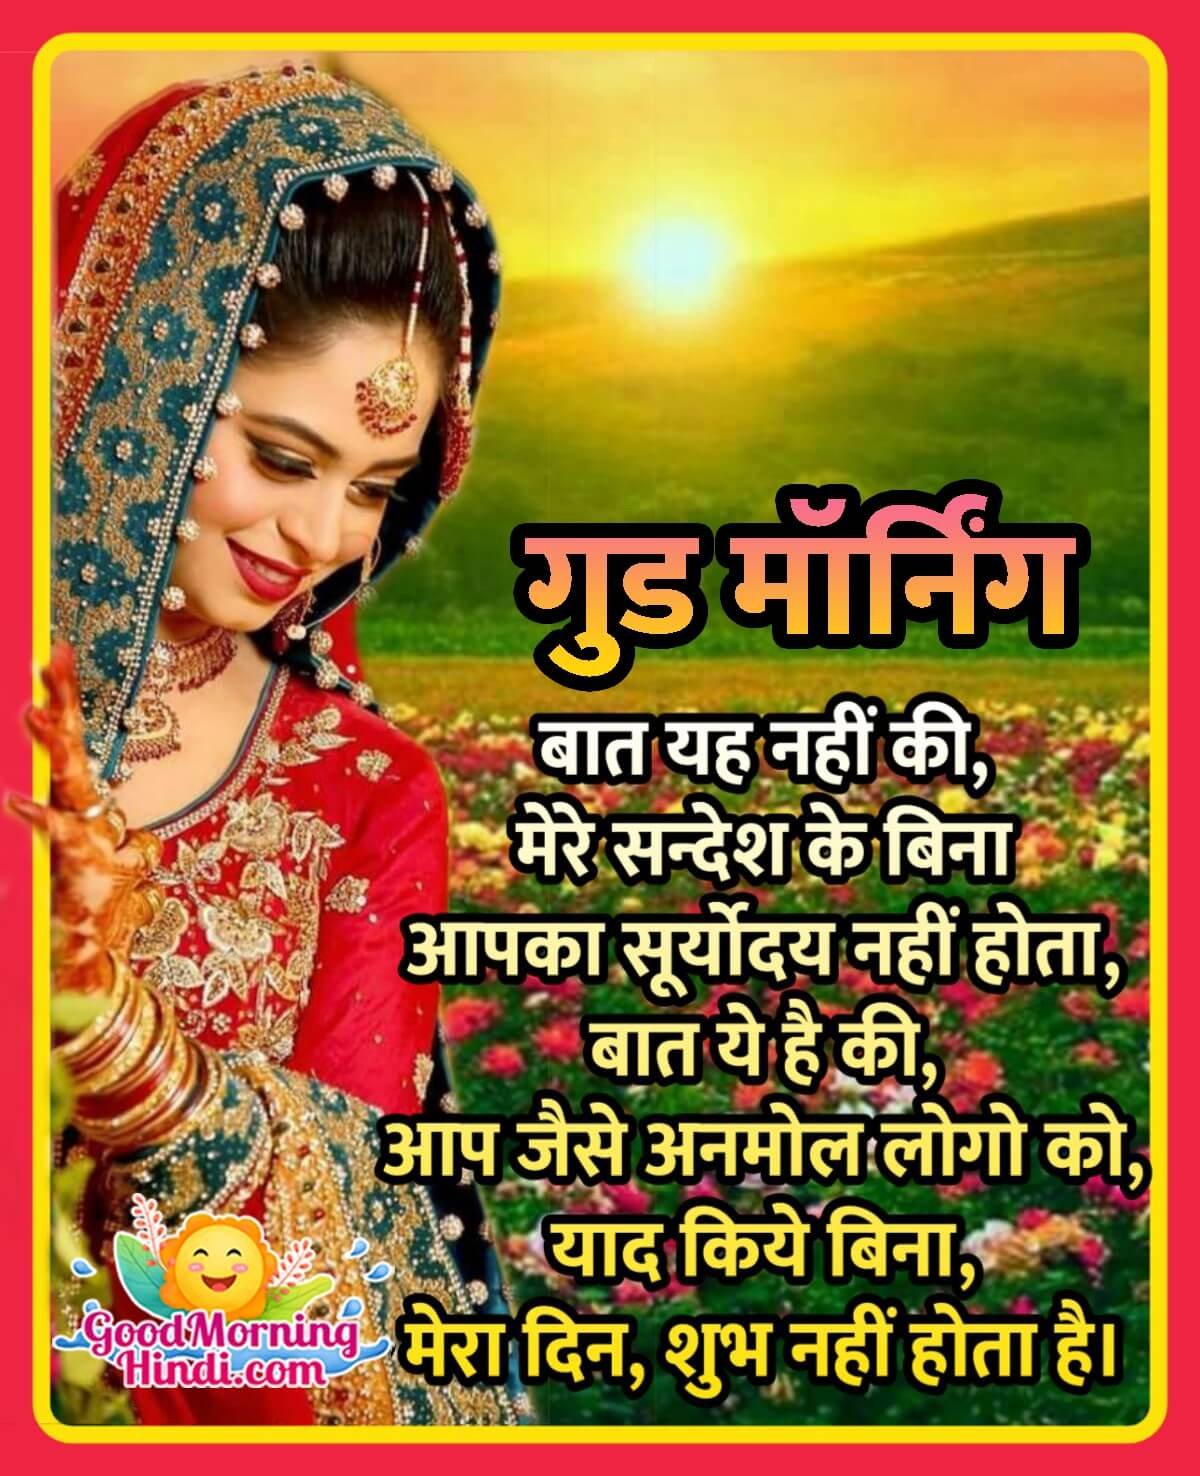 Good Morning Hindi Sandesh Image